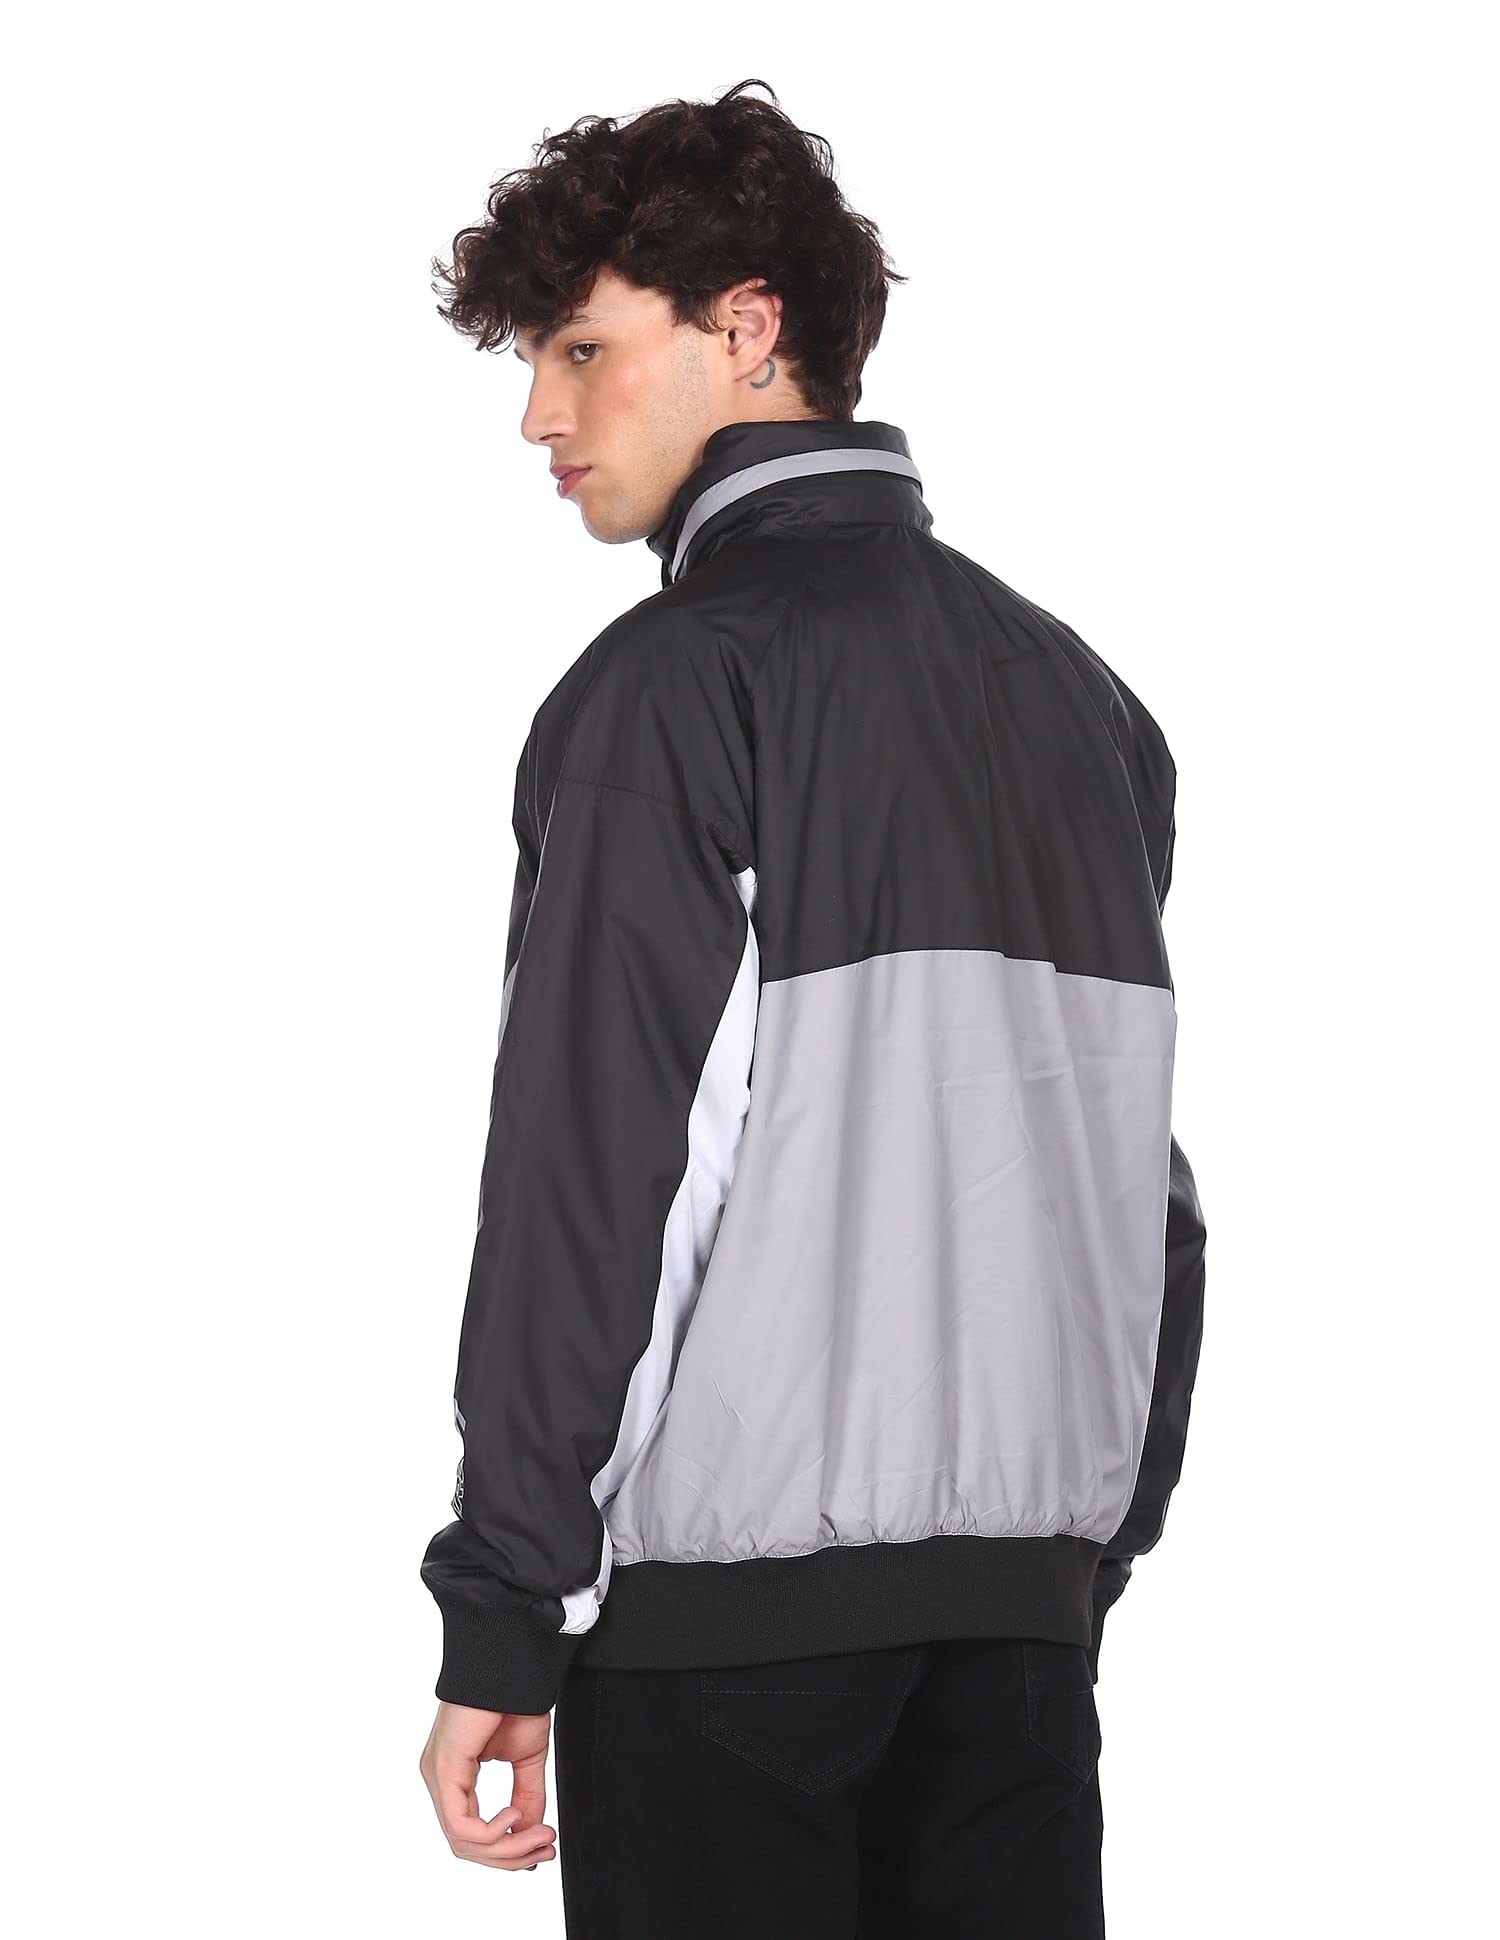 AEROPOSTALE Men's Wrap Coat (Black and Grey) 